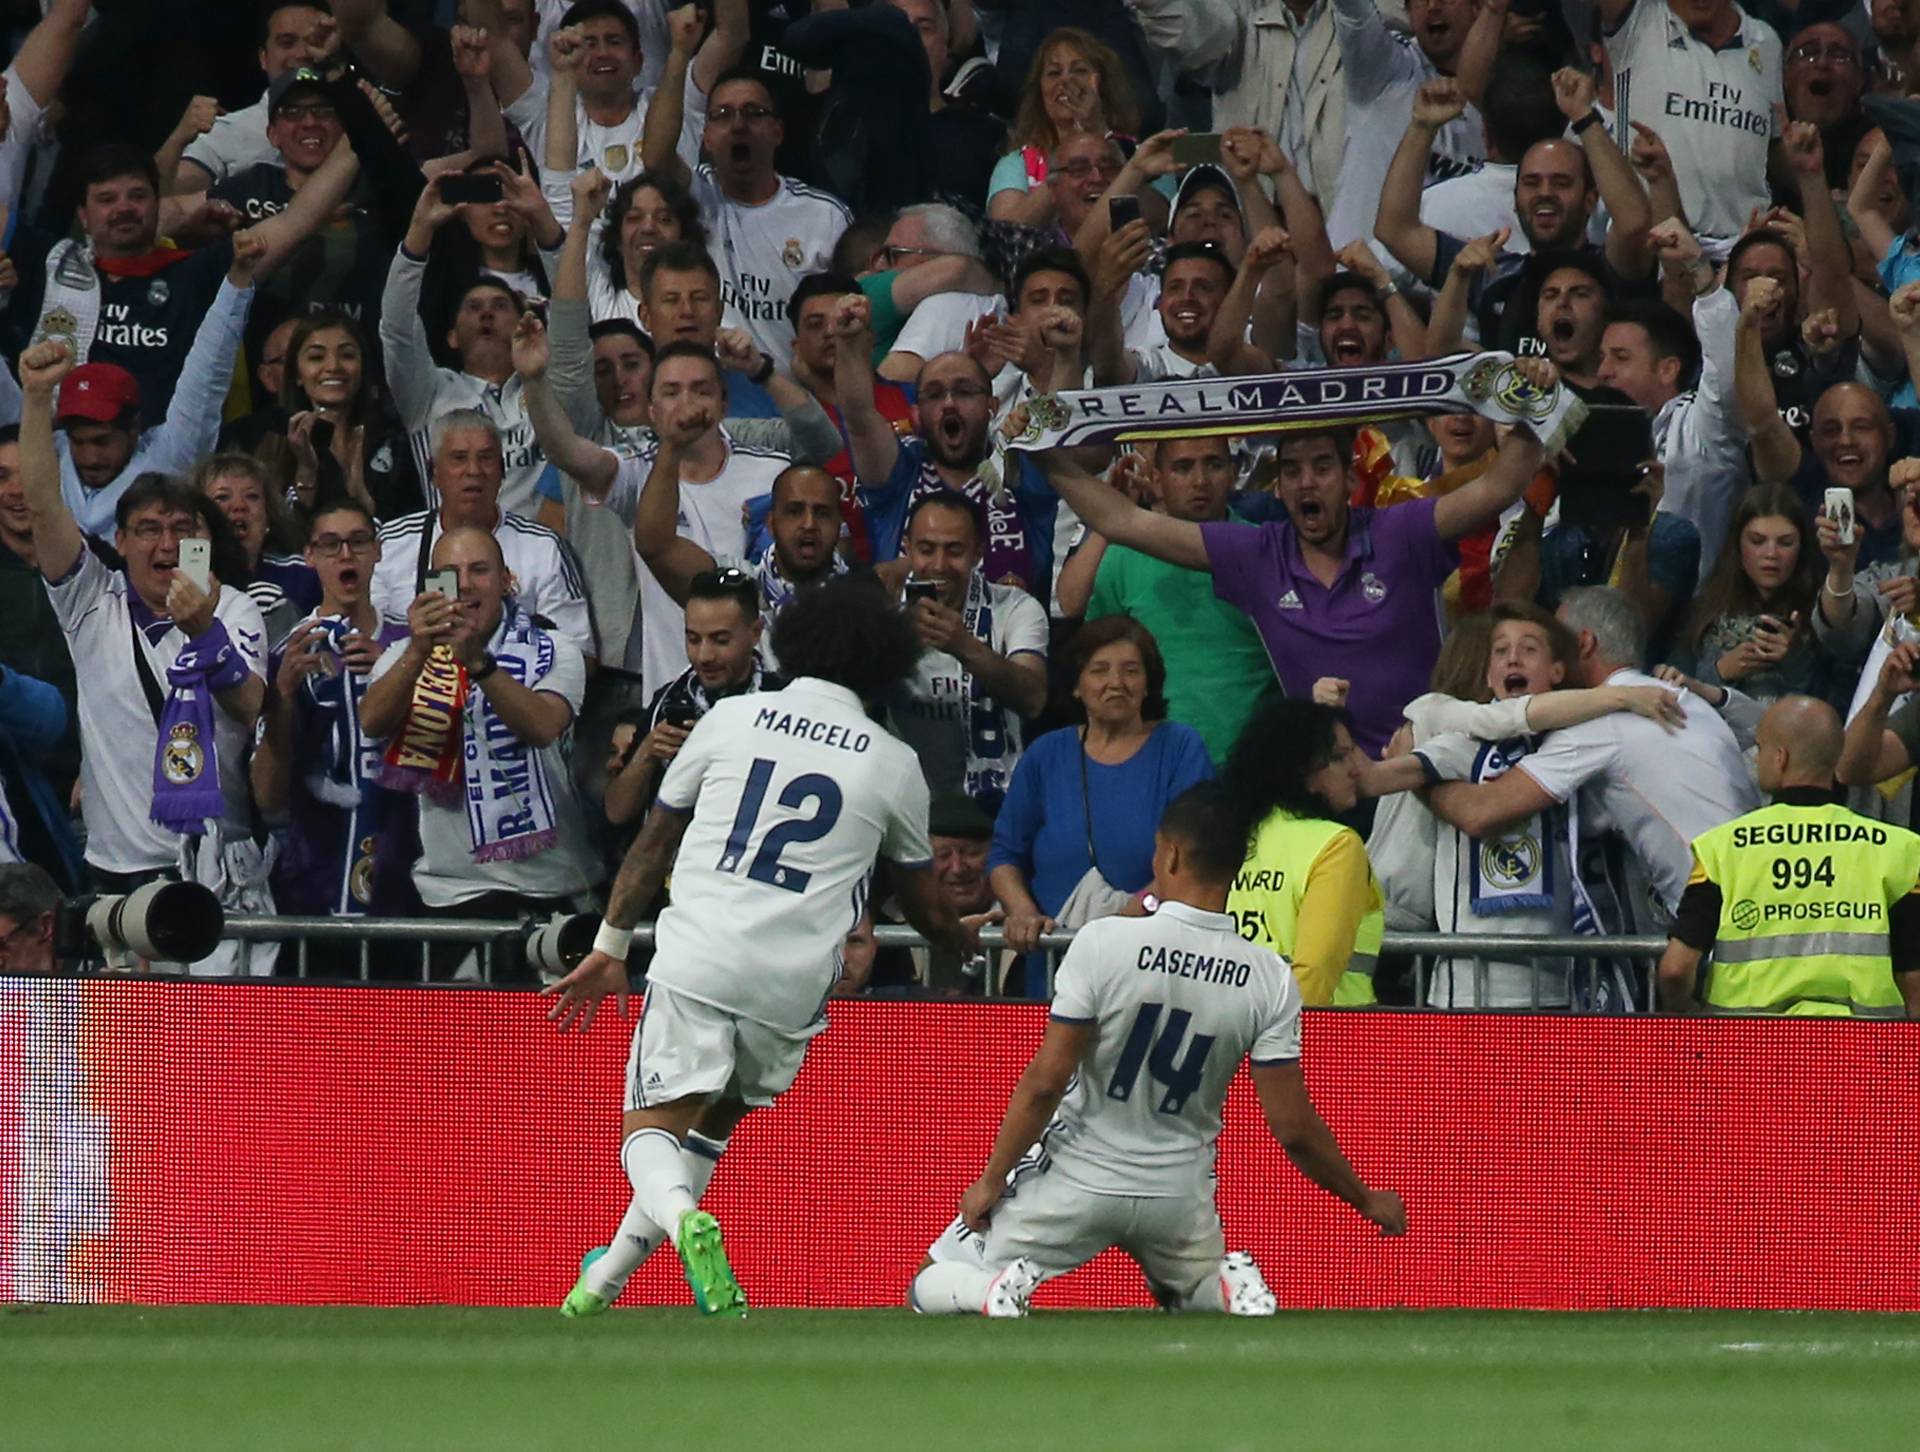 Real Madrid's Casemiro celebrates scoring their first goal